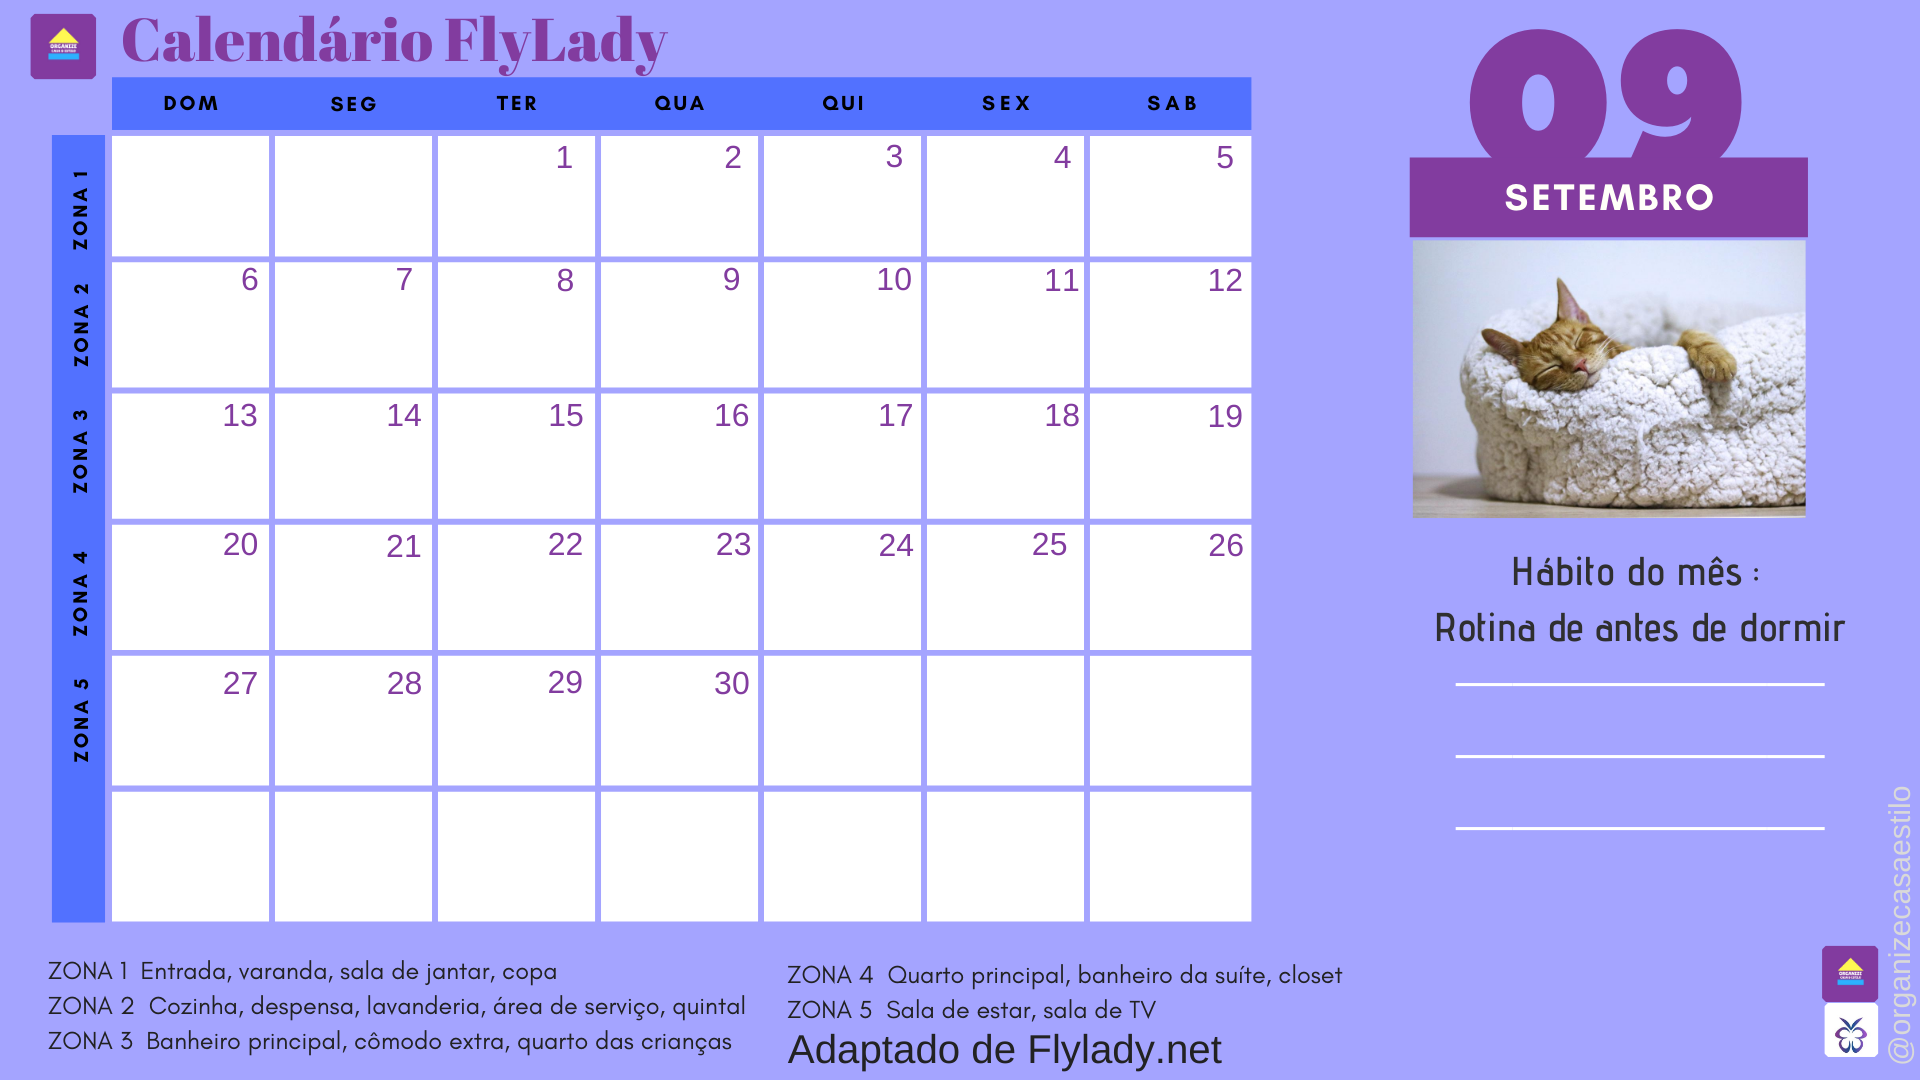 Programe Suas Tarefas Com O Calendario Flylady Setembro De 2020 Organize Casa Estilo